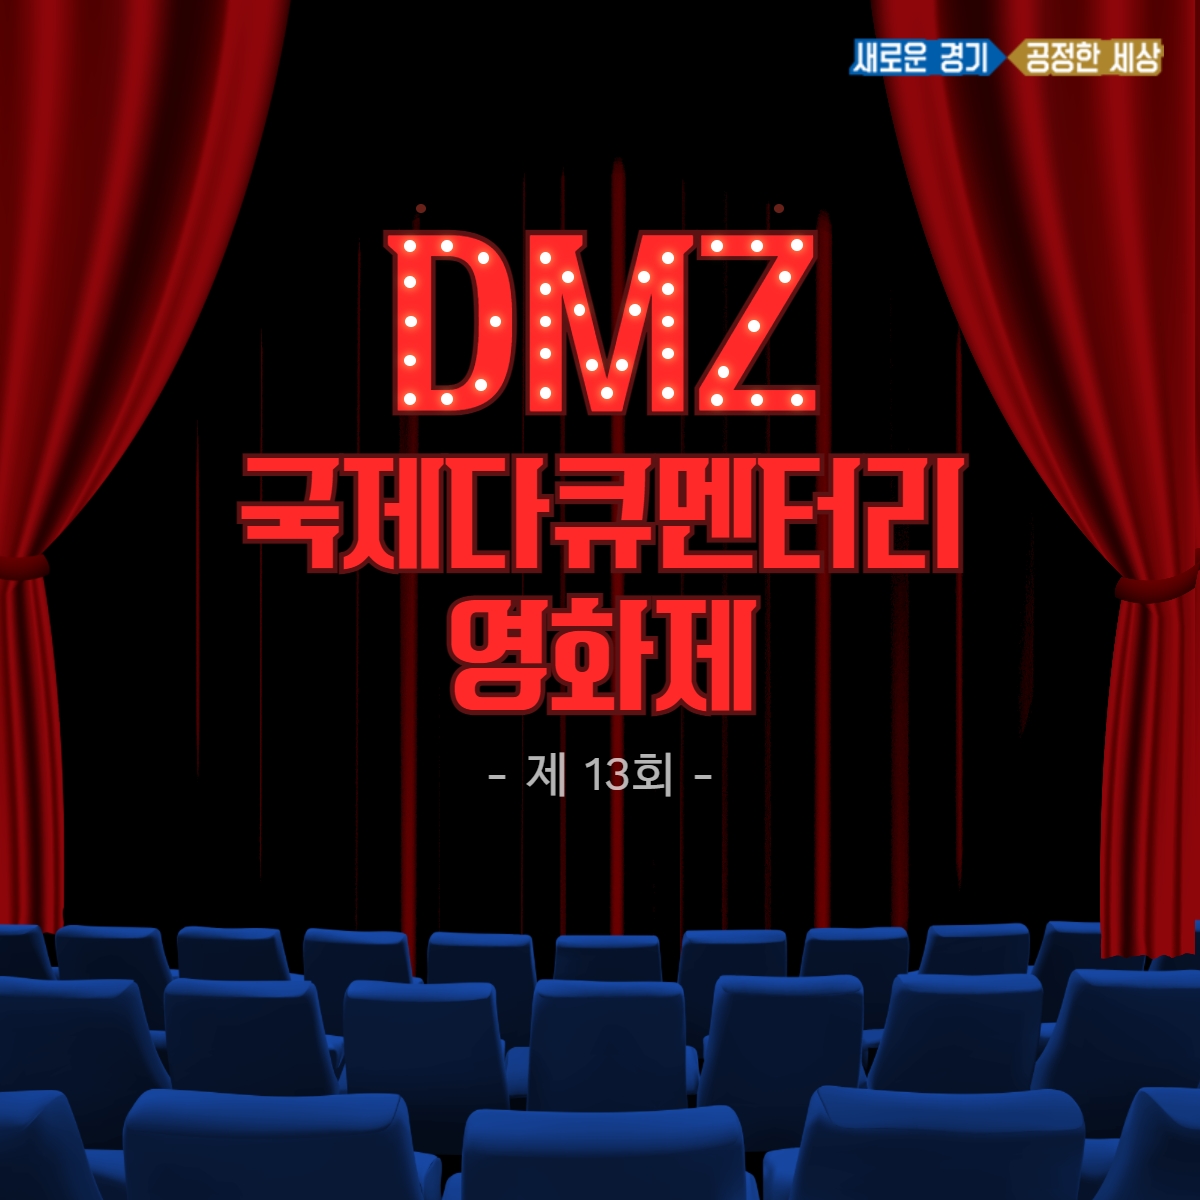 DMZ국제다큐멘터리영화제